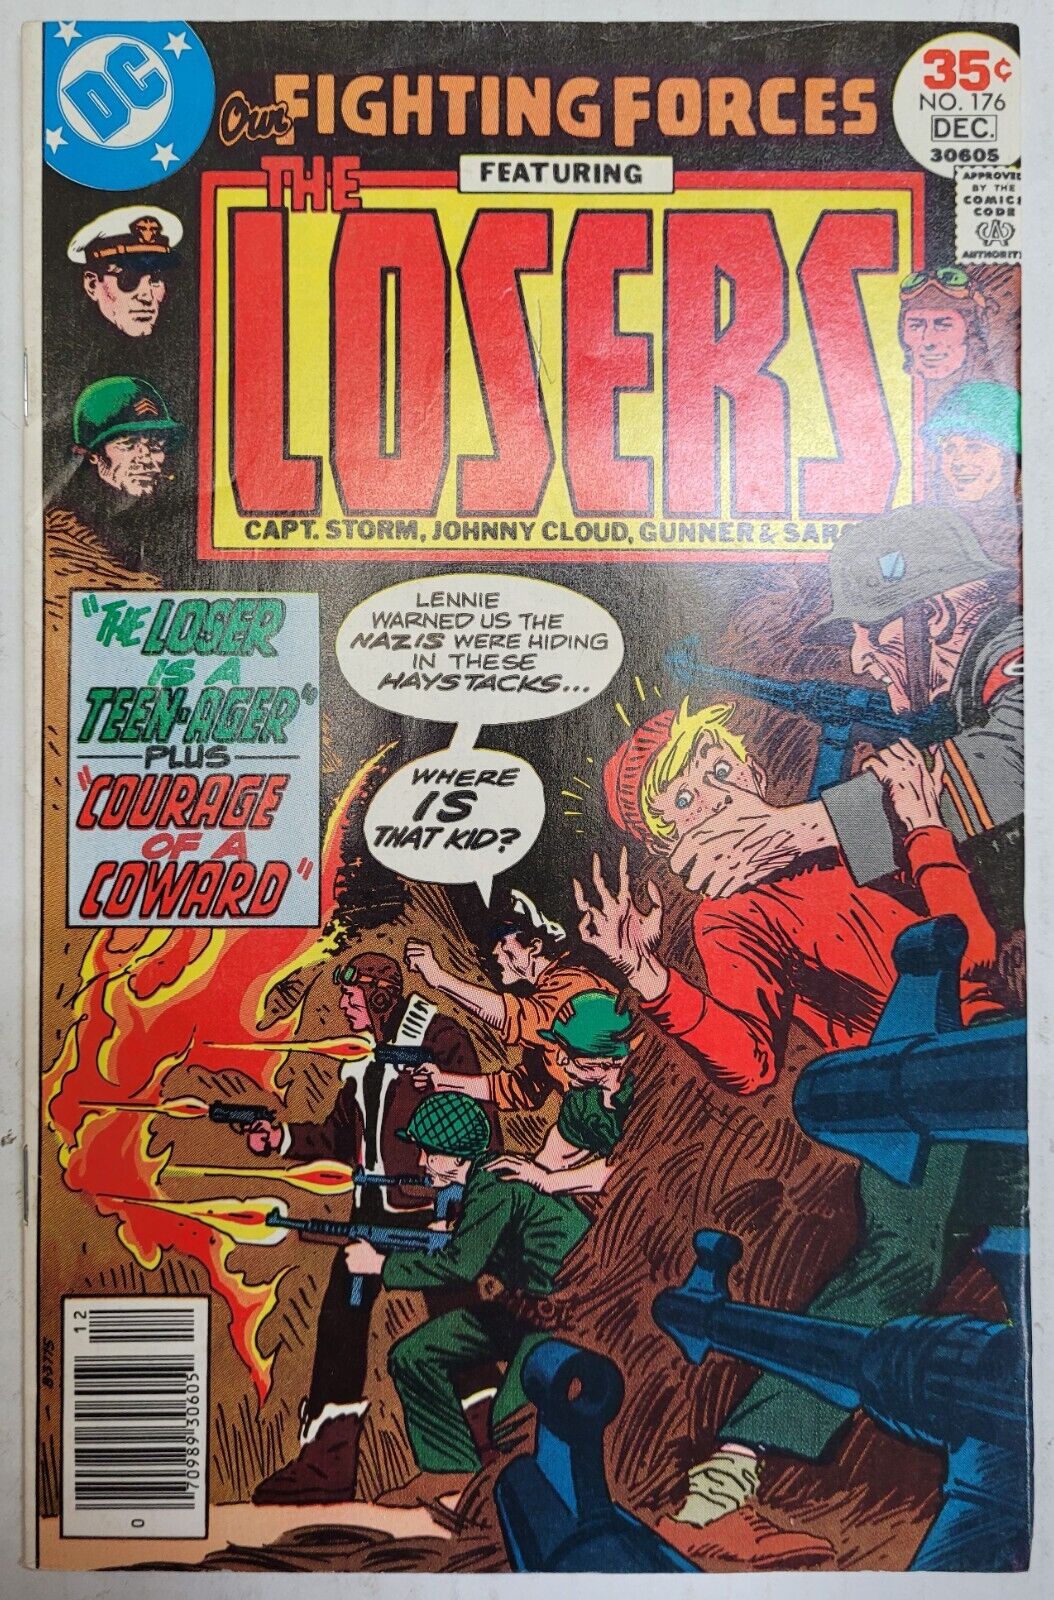 OUR FIGHTING FORCES Vol 24 #176 Nov-Dec 1977 - DC COMICS INC - Bronze Age